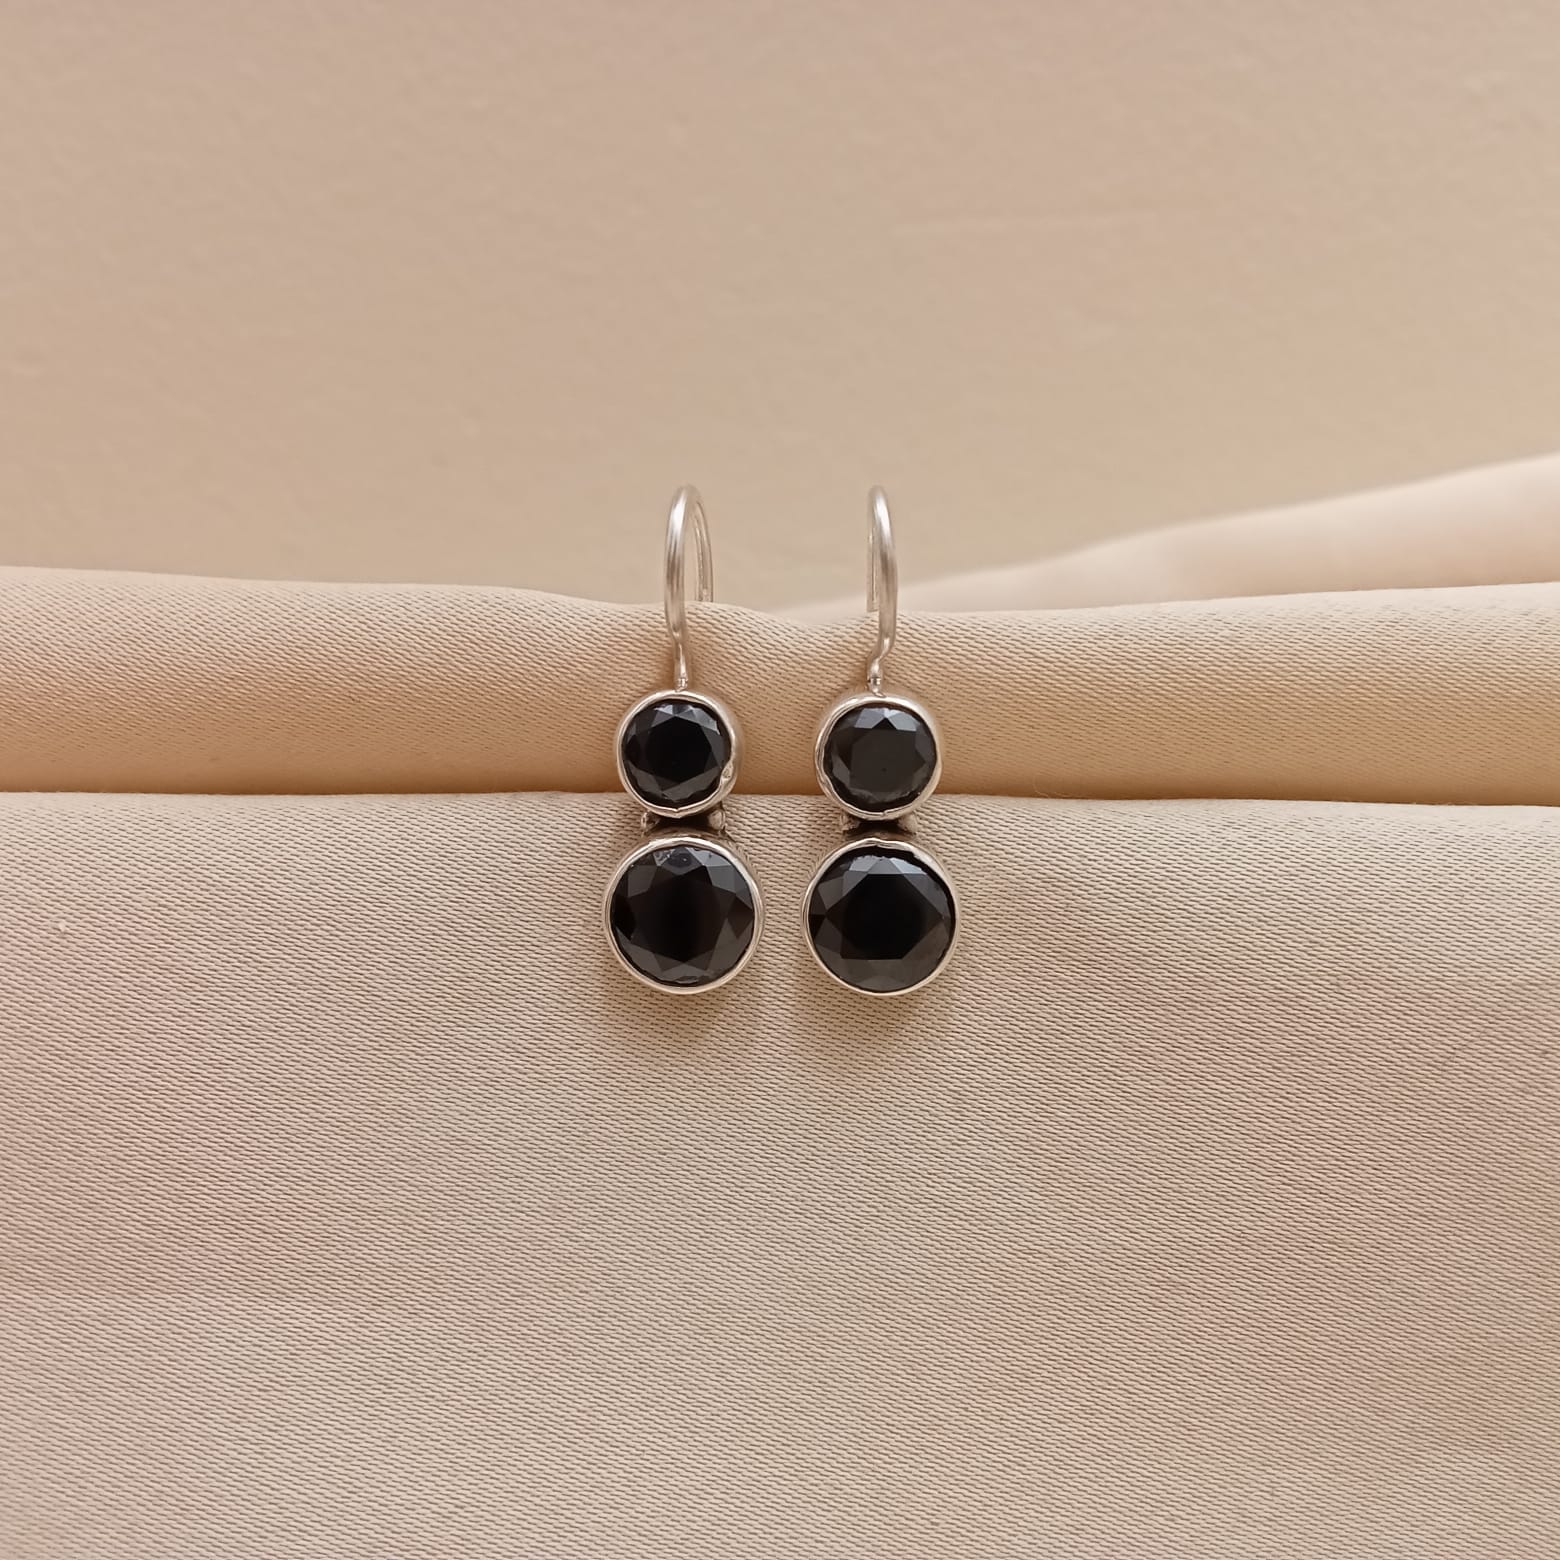 Cute Black Onyx Earrings